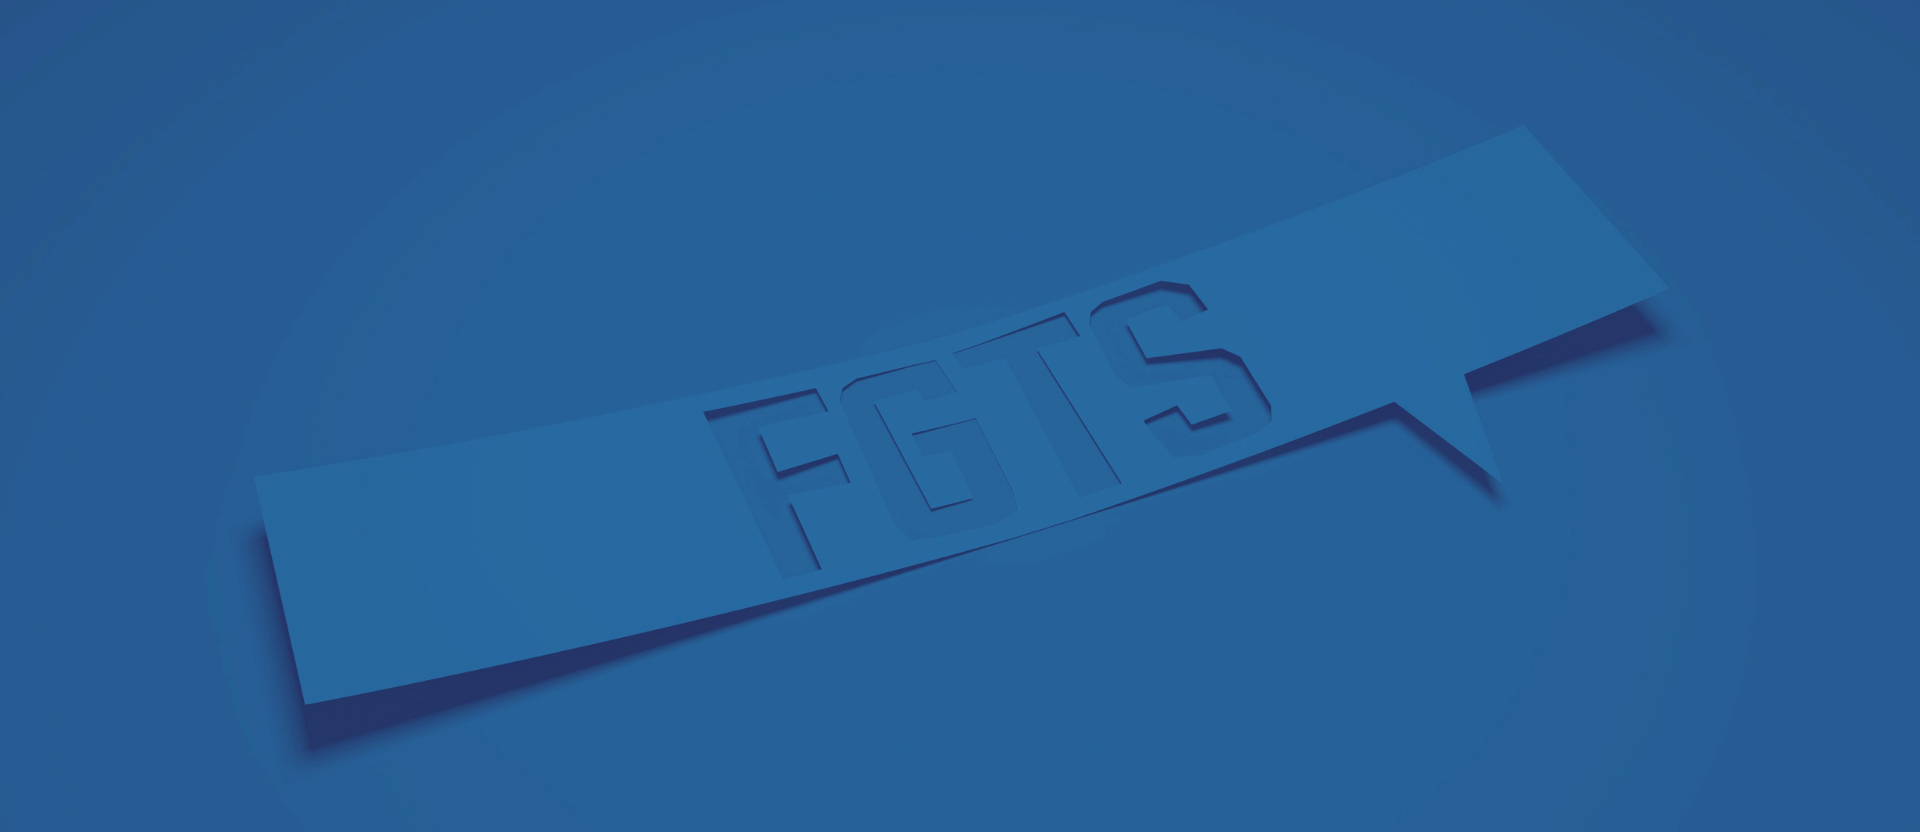 Como funciona o saque-aniversário do FGTS e o que é o empréstimo FGTS?